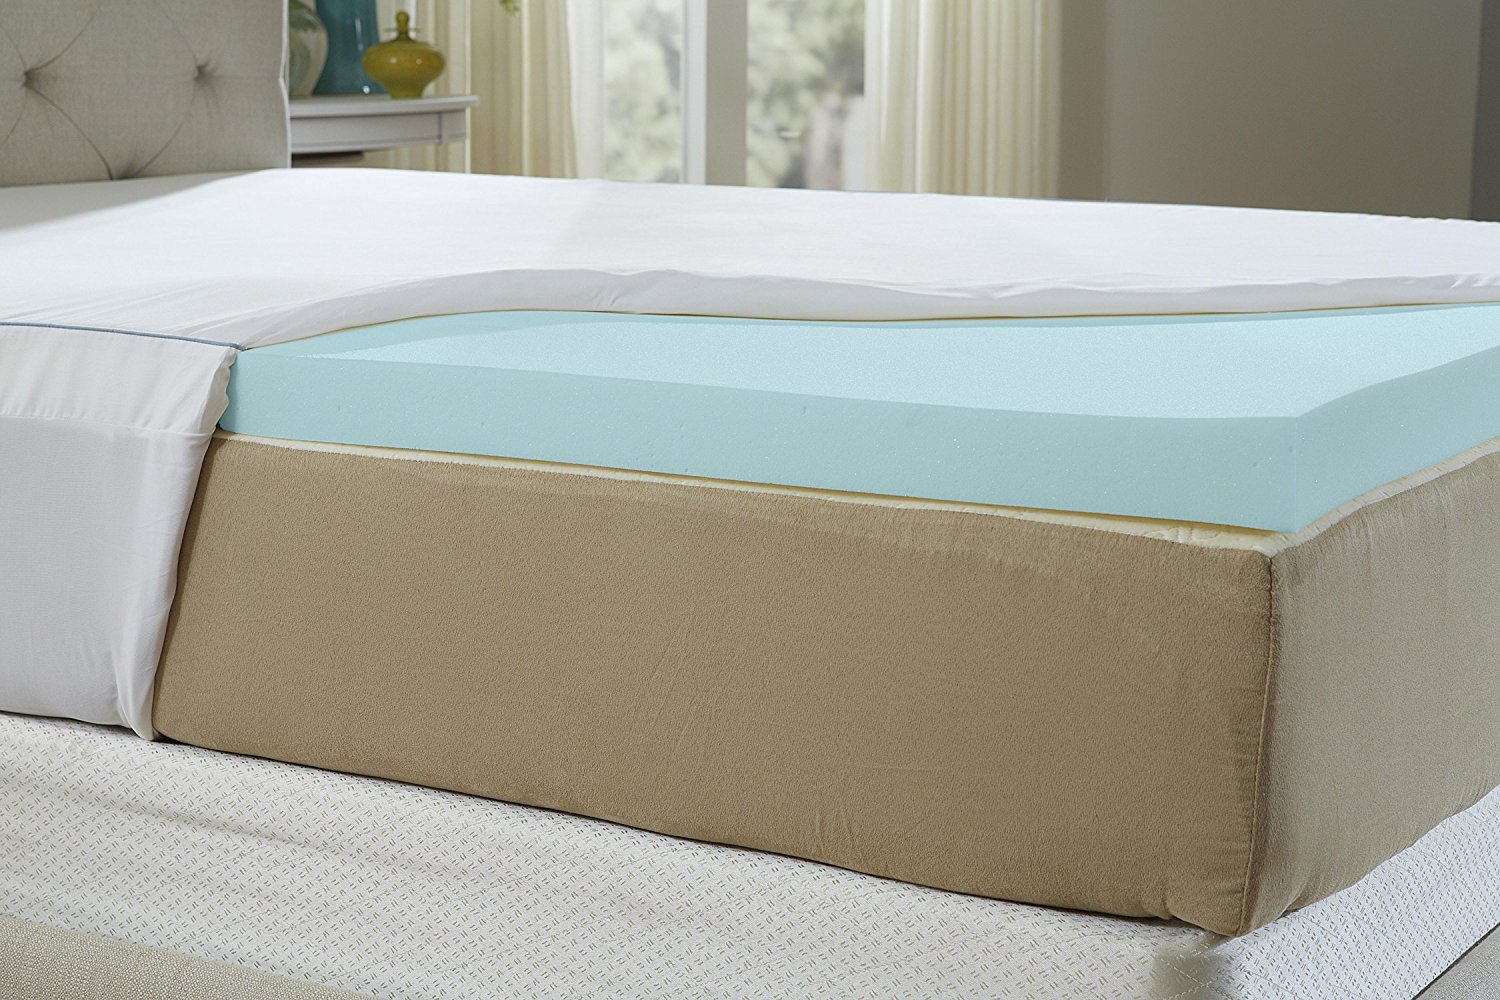 sleep charge mattress pad reviews